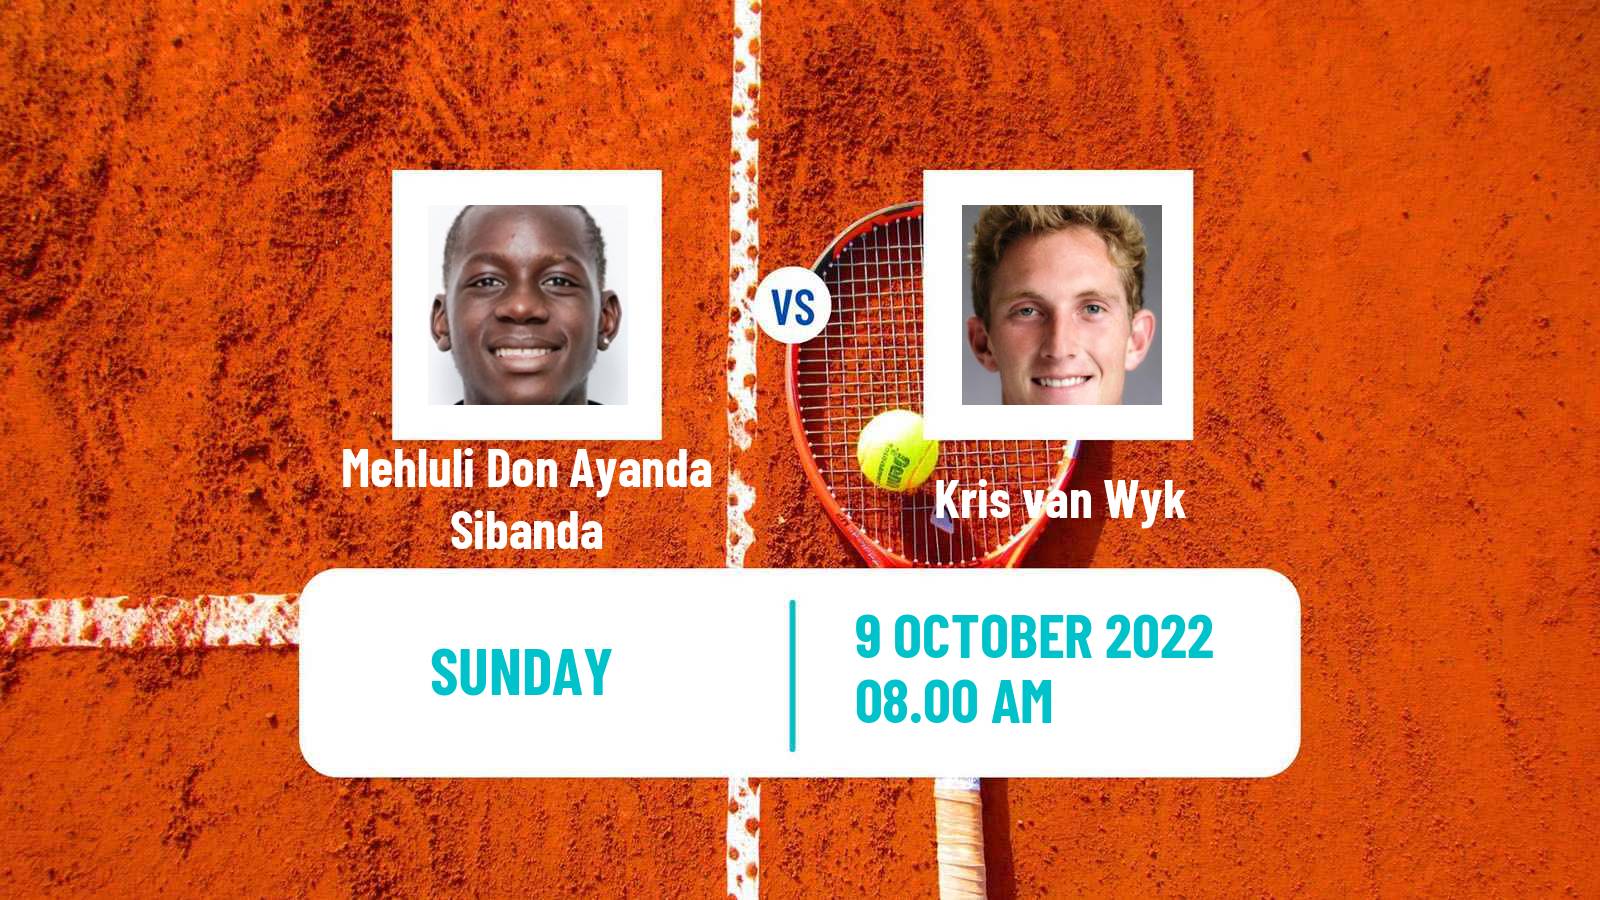 Tennis ITF Tournaments Mehluli Don Ayanda Sibanda - Kris van Wyk